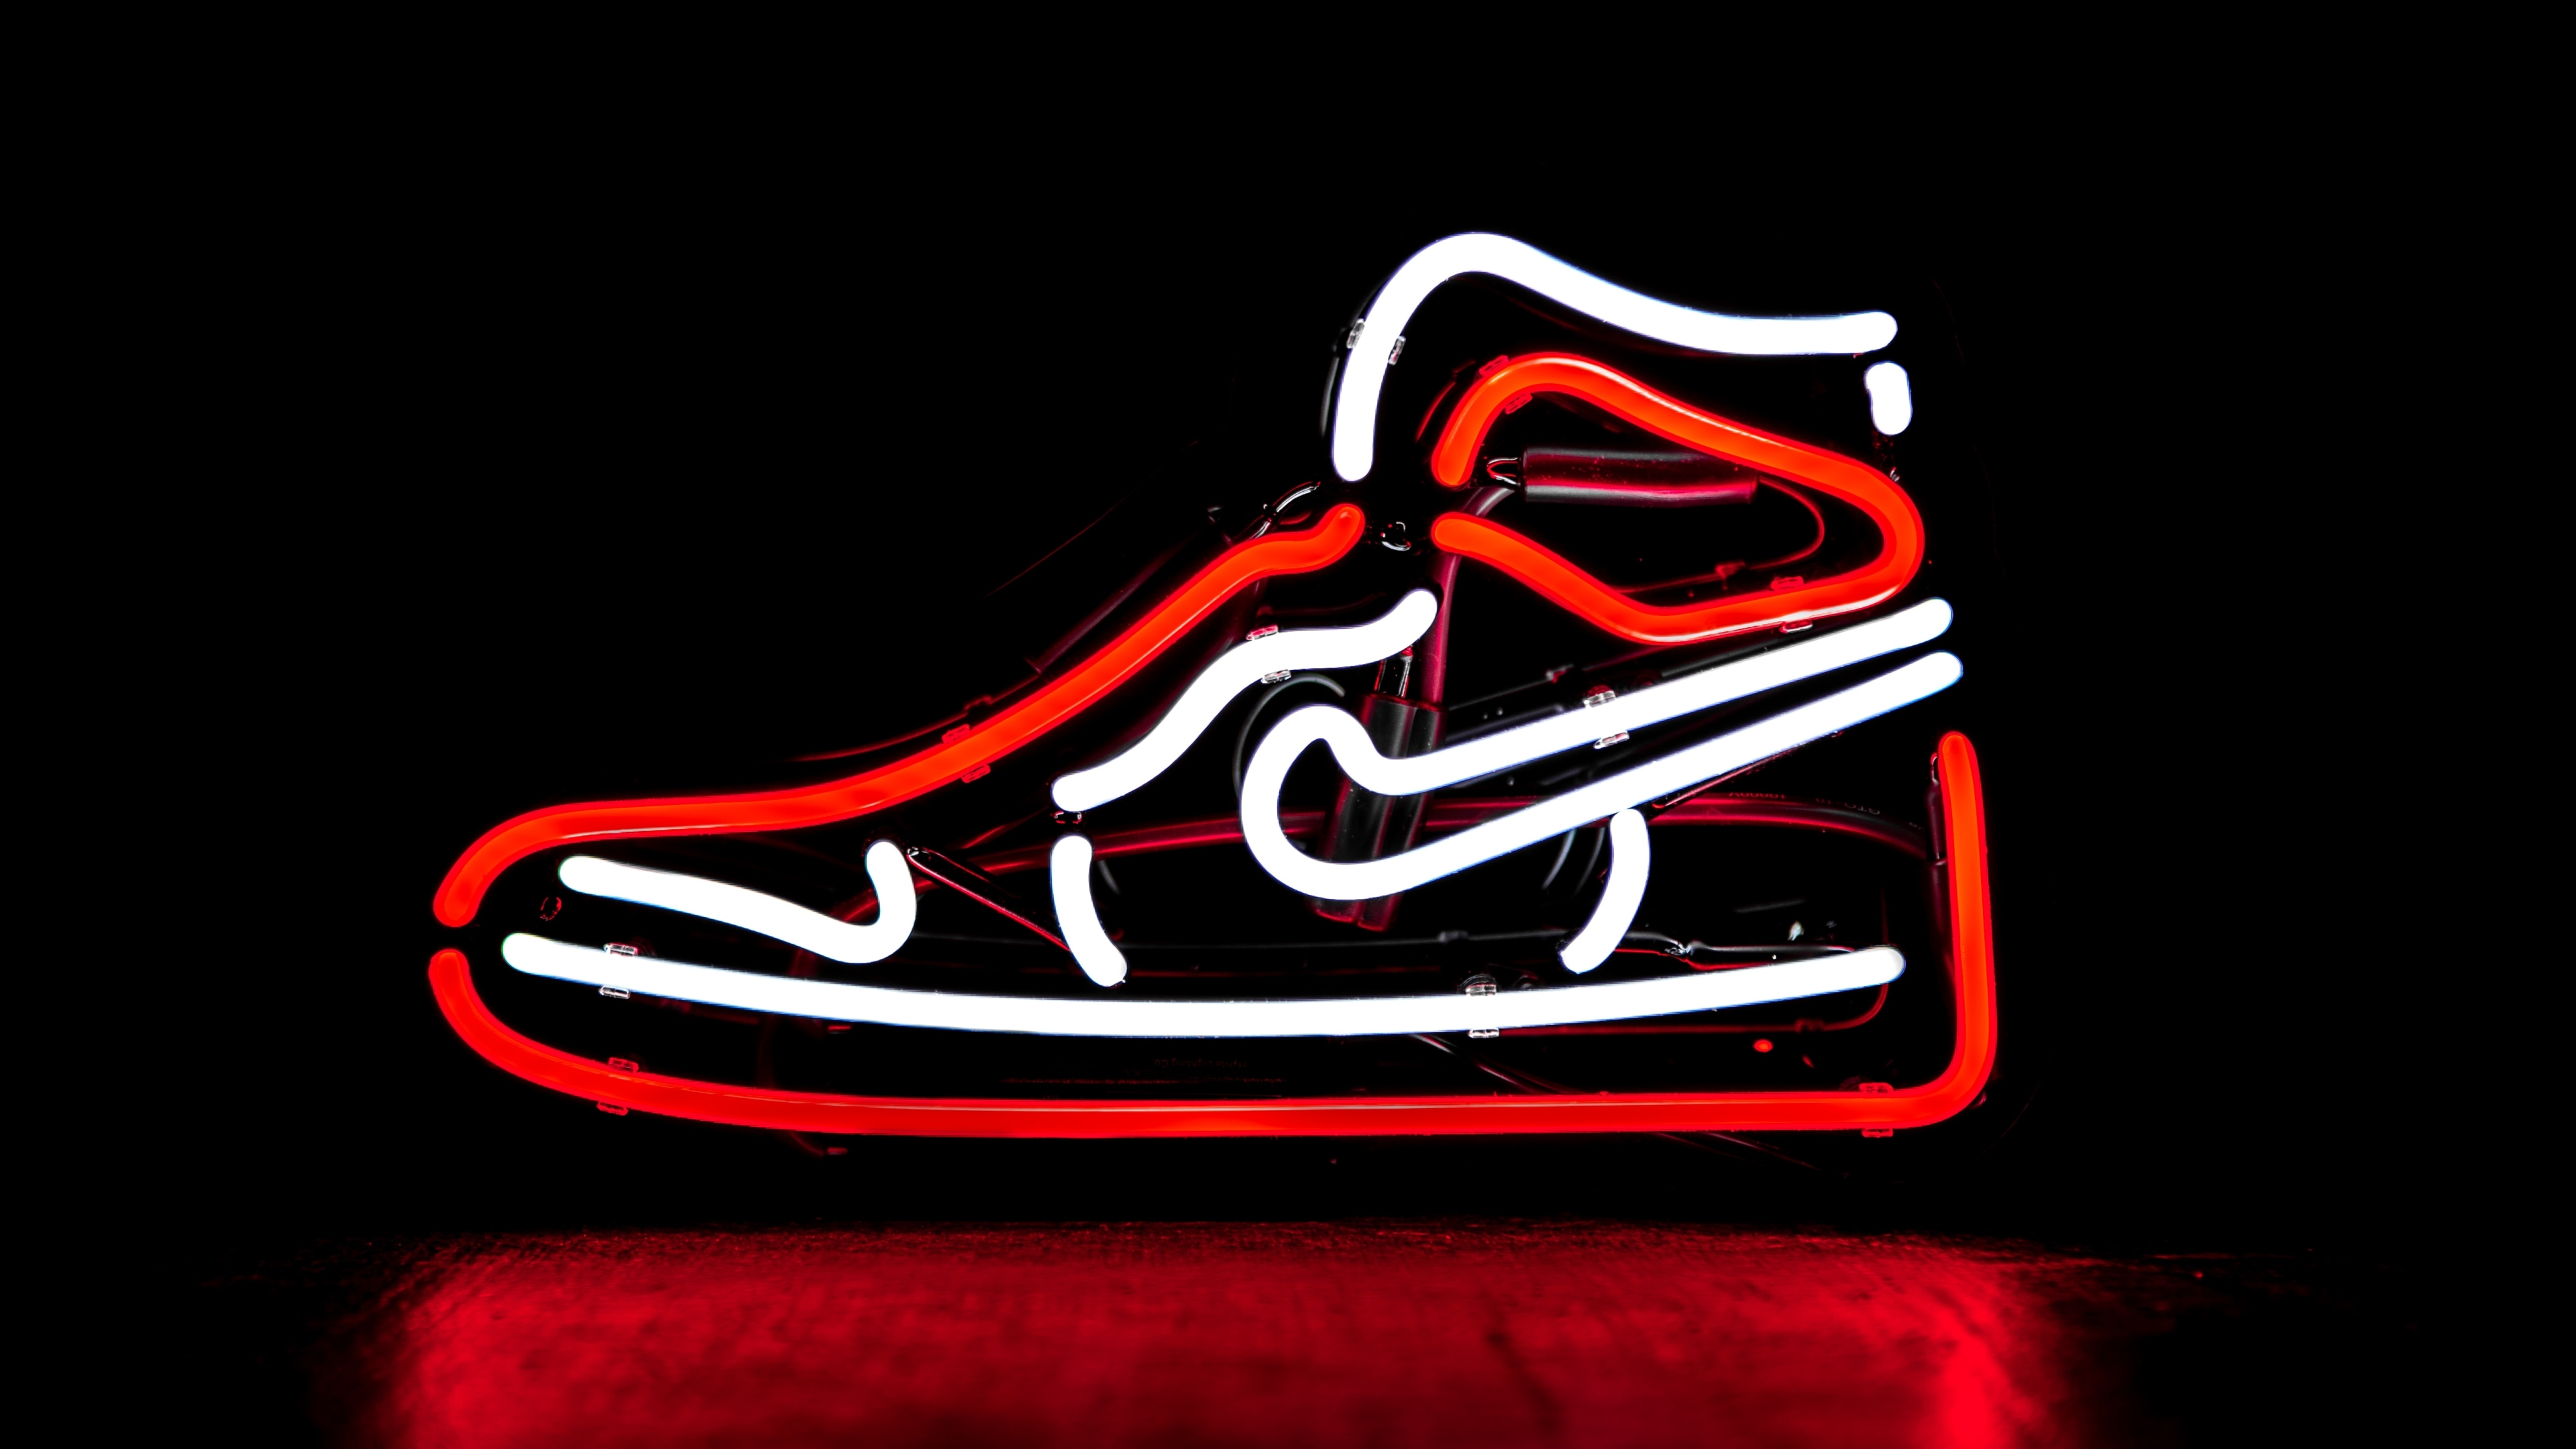 3840x2160 Resolution Neon Jordan Retro Shoe 4K Wallpaper - Wallpapers Den